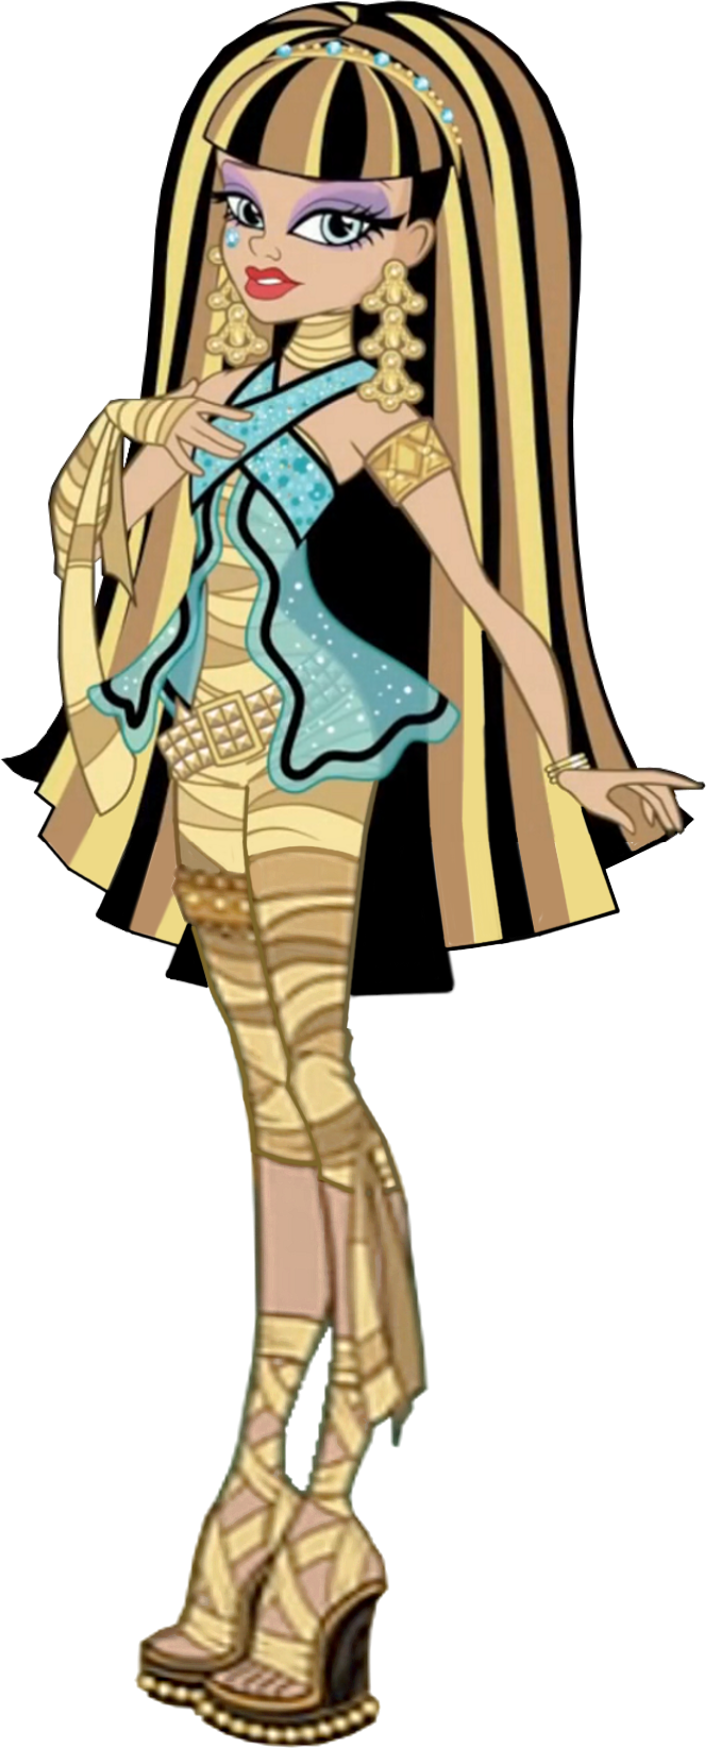 Monster High Cleo de Nile, by uruseline on deviantart.com